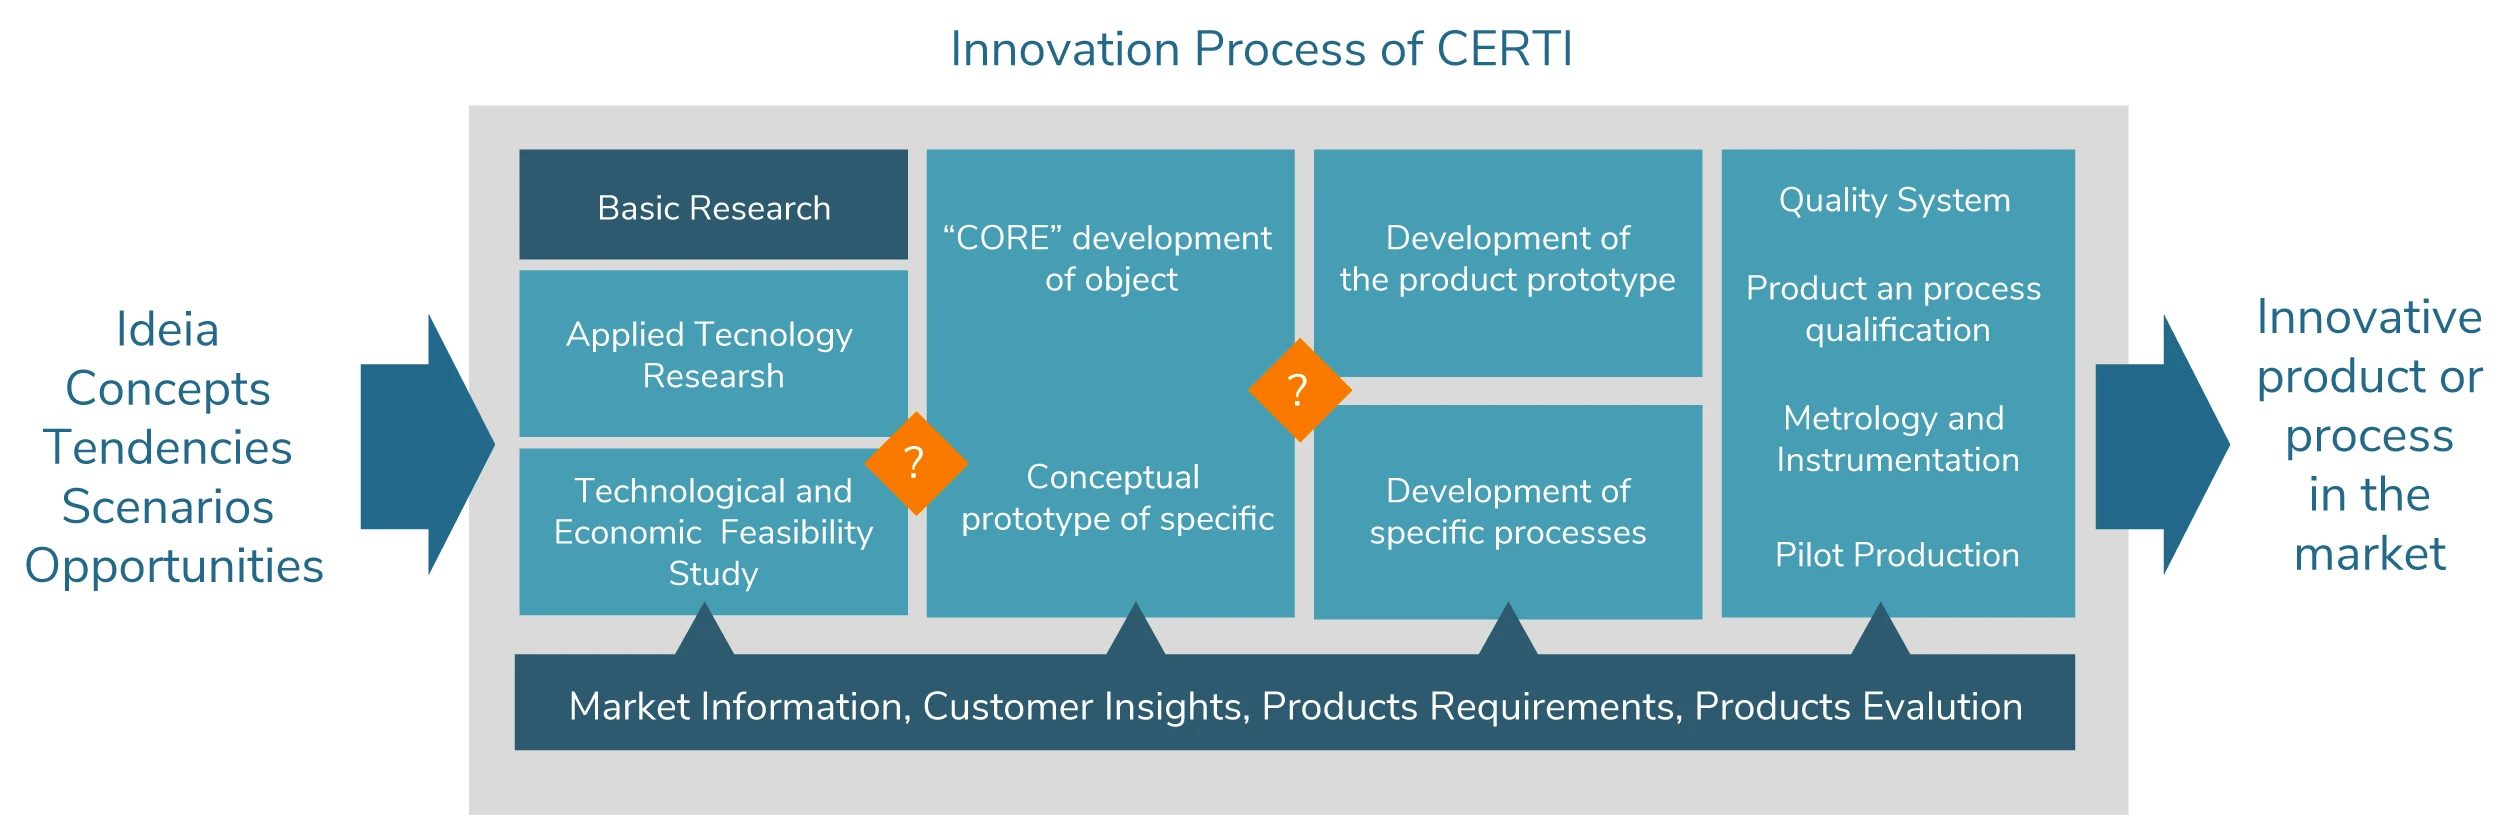 Innovation Process of CERTI